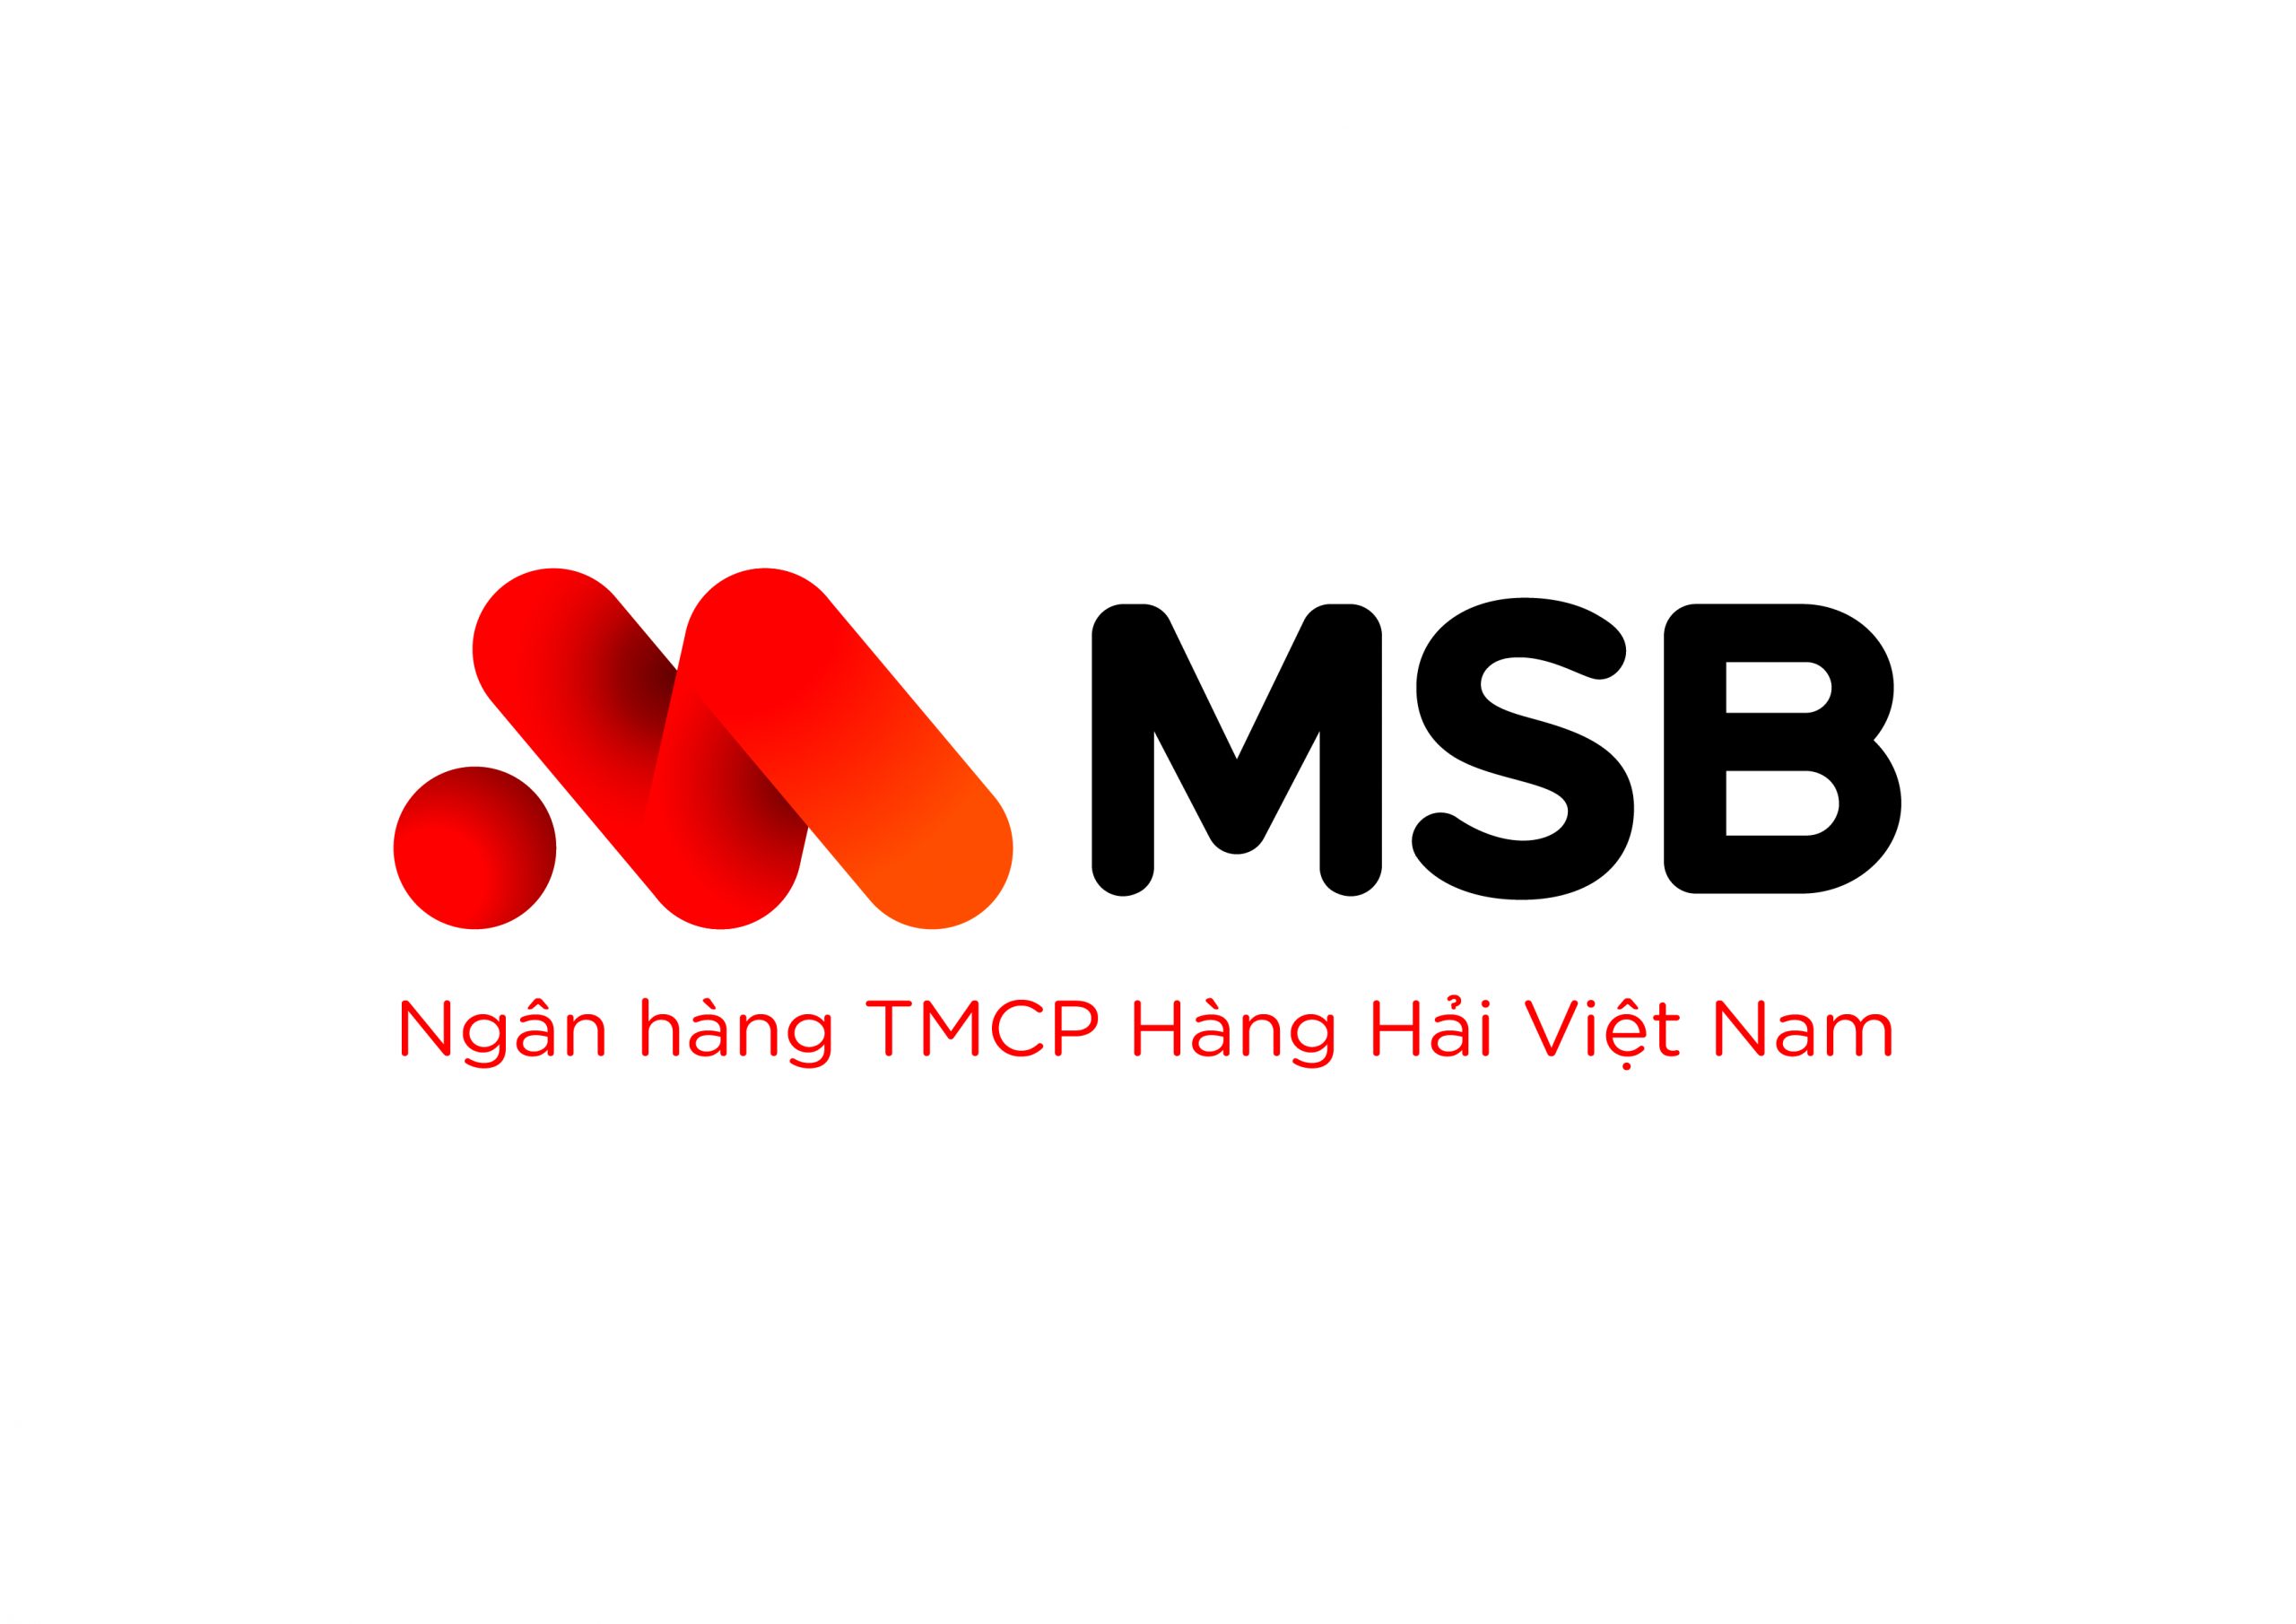 https://anphatsecurity.vn/wp-content/uploads/2020/06/Logo-MSB-scaled.jpg